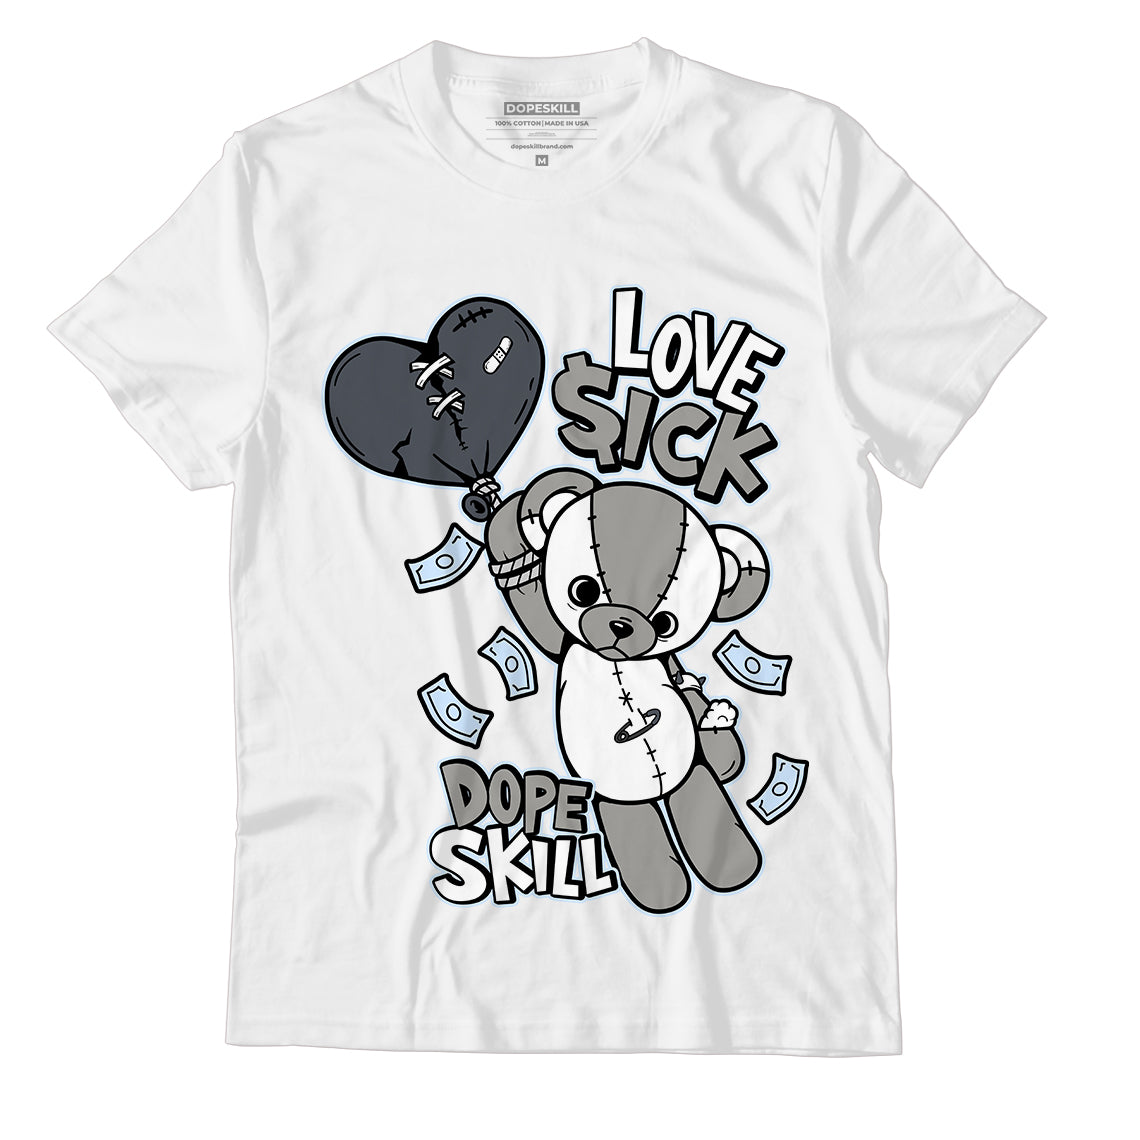 Jordan 11 Cool Grey DopeSkill T-Shirt Love Sick Graphic, hiphop tees, grey graphic tees, sneakers match shirt - White